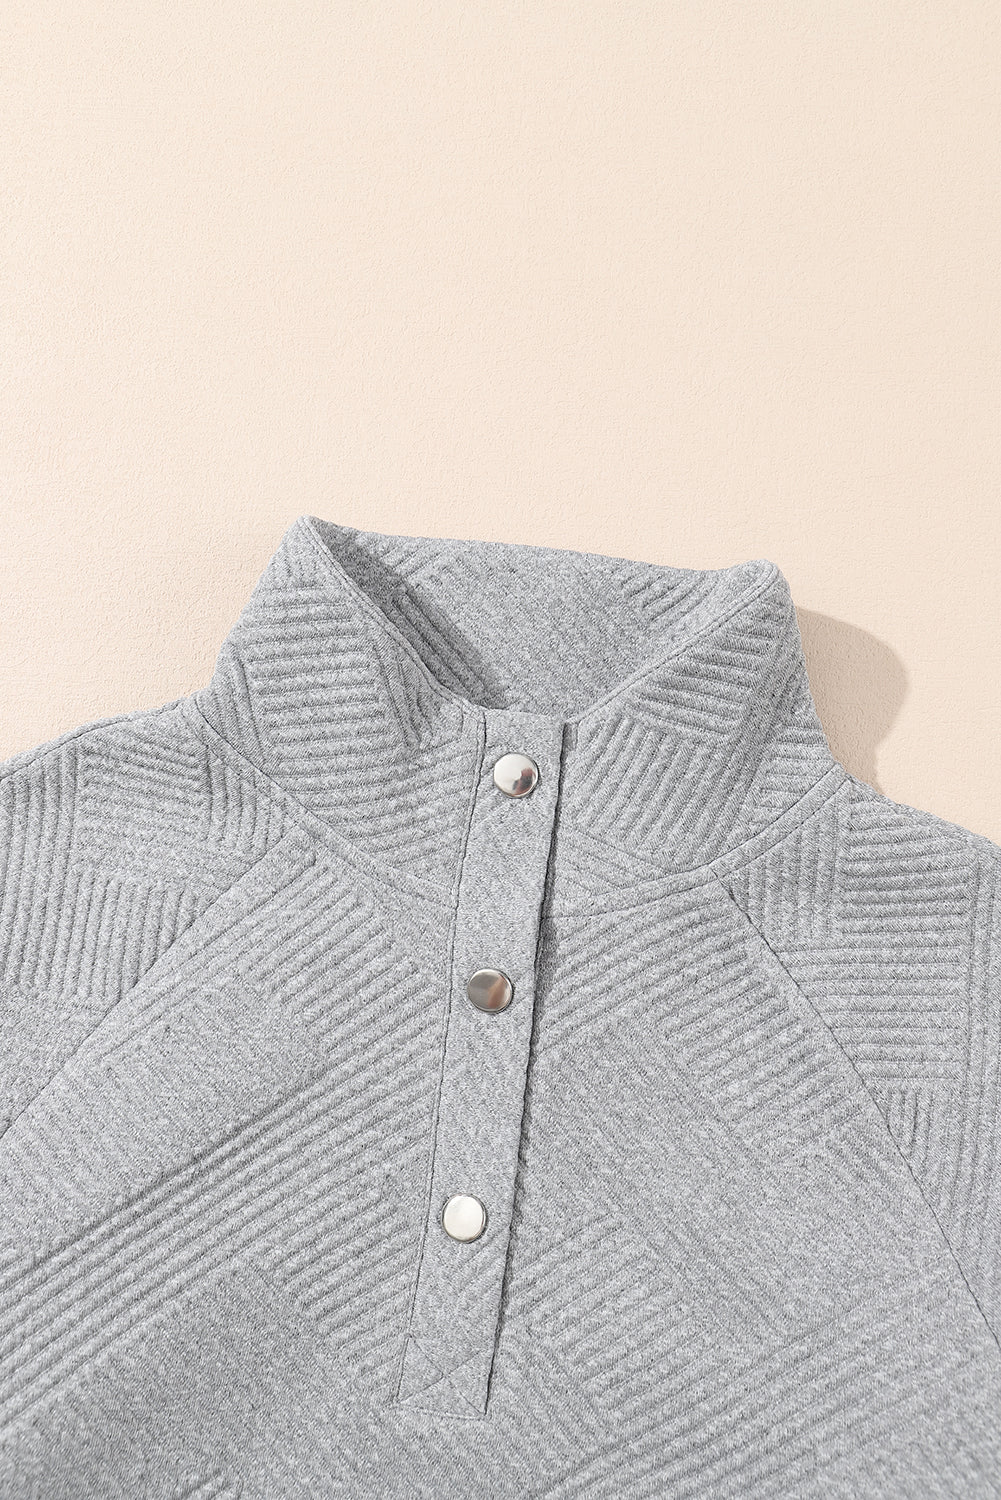 Pale Khaki Textured Knit Buttoned Kangaroo Pocket Sweatshirt